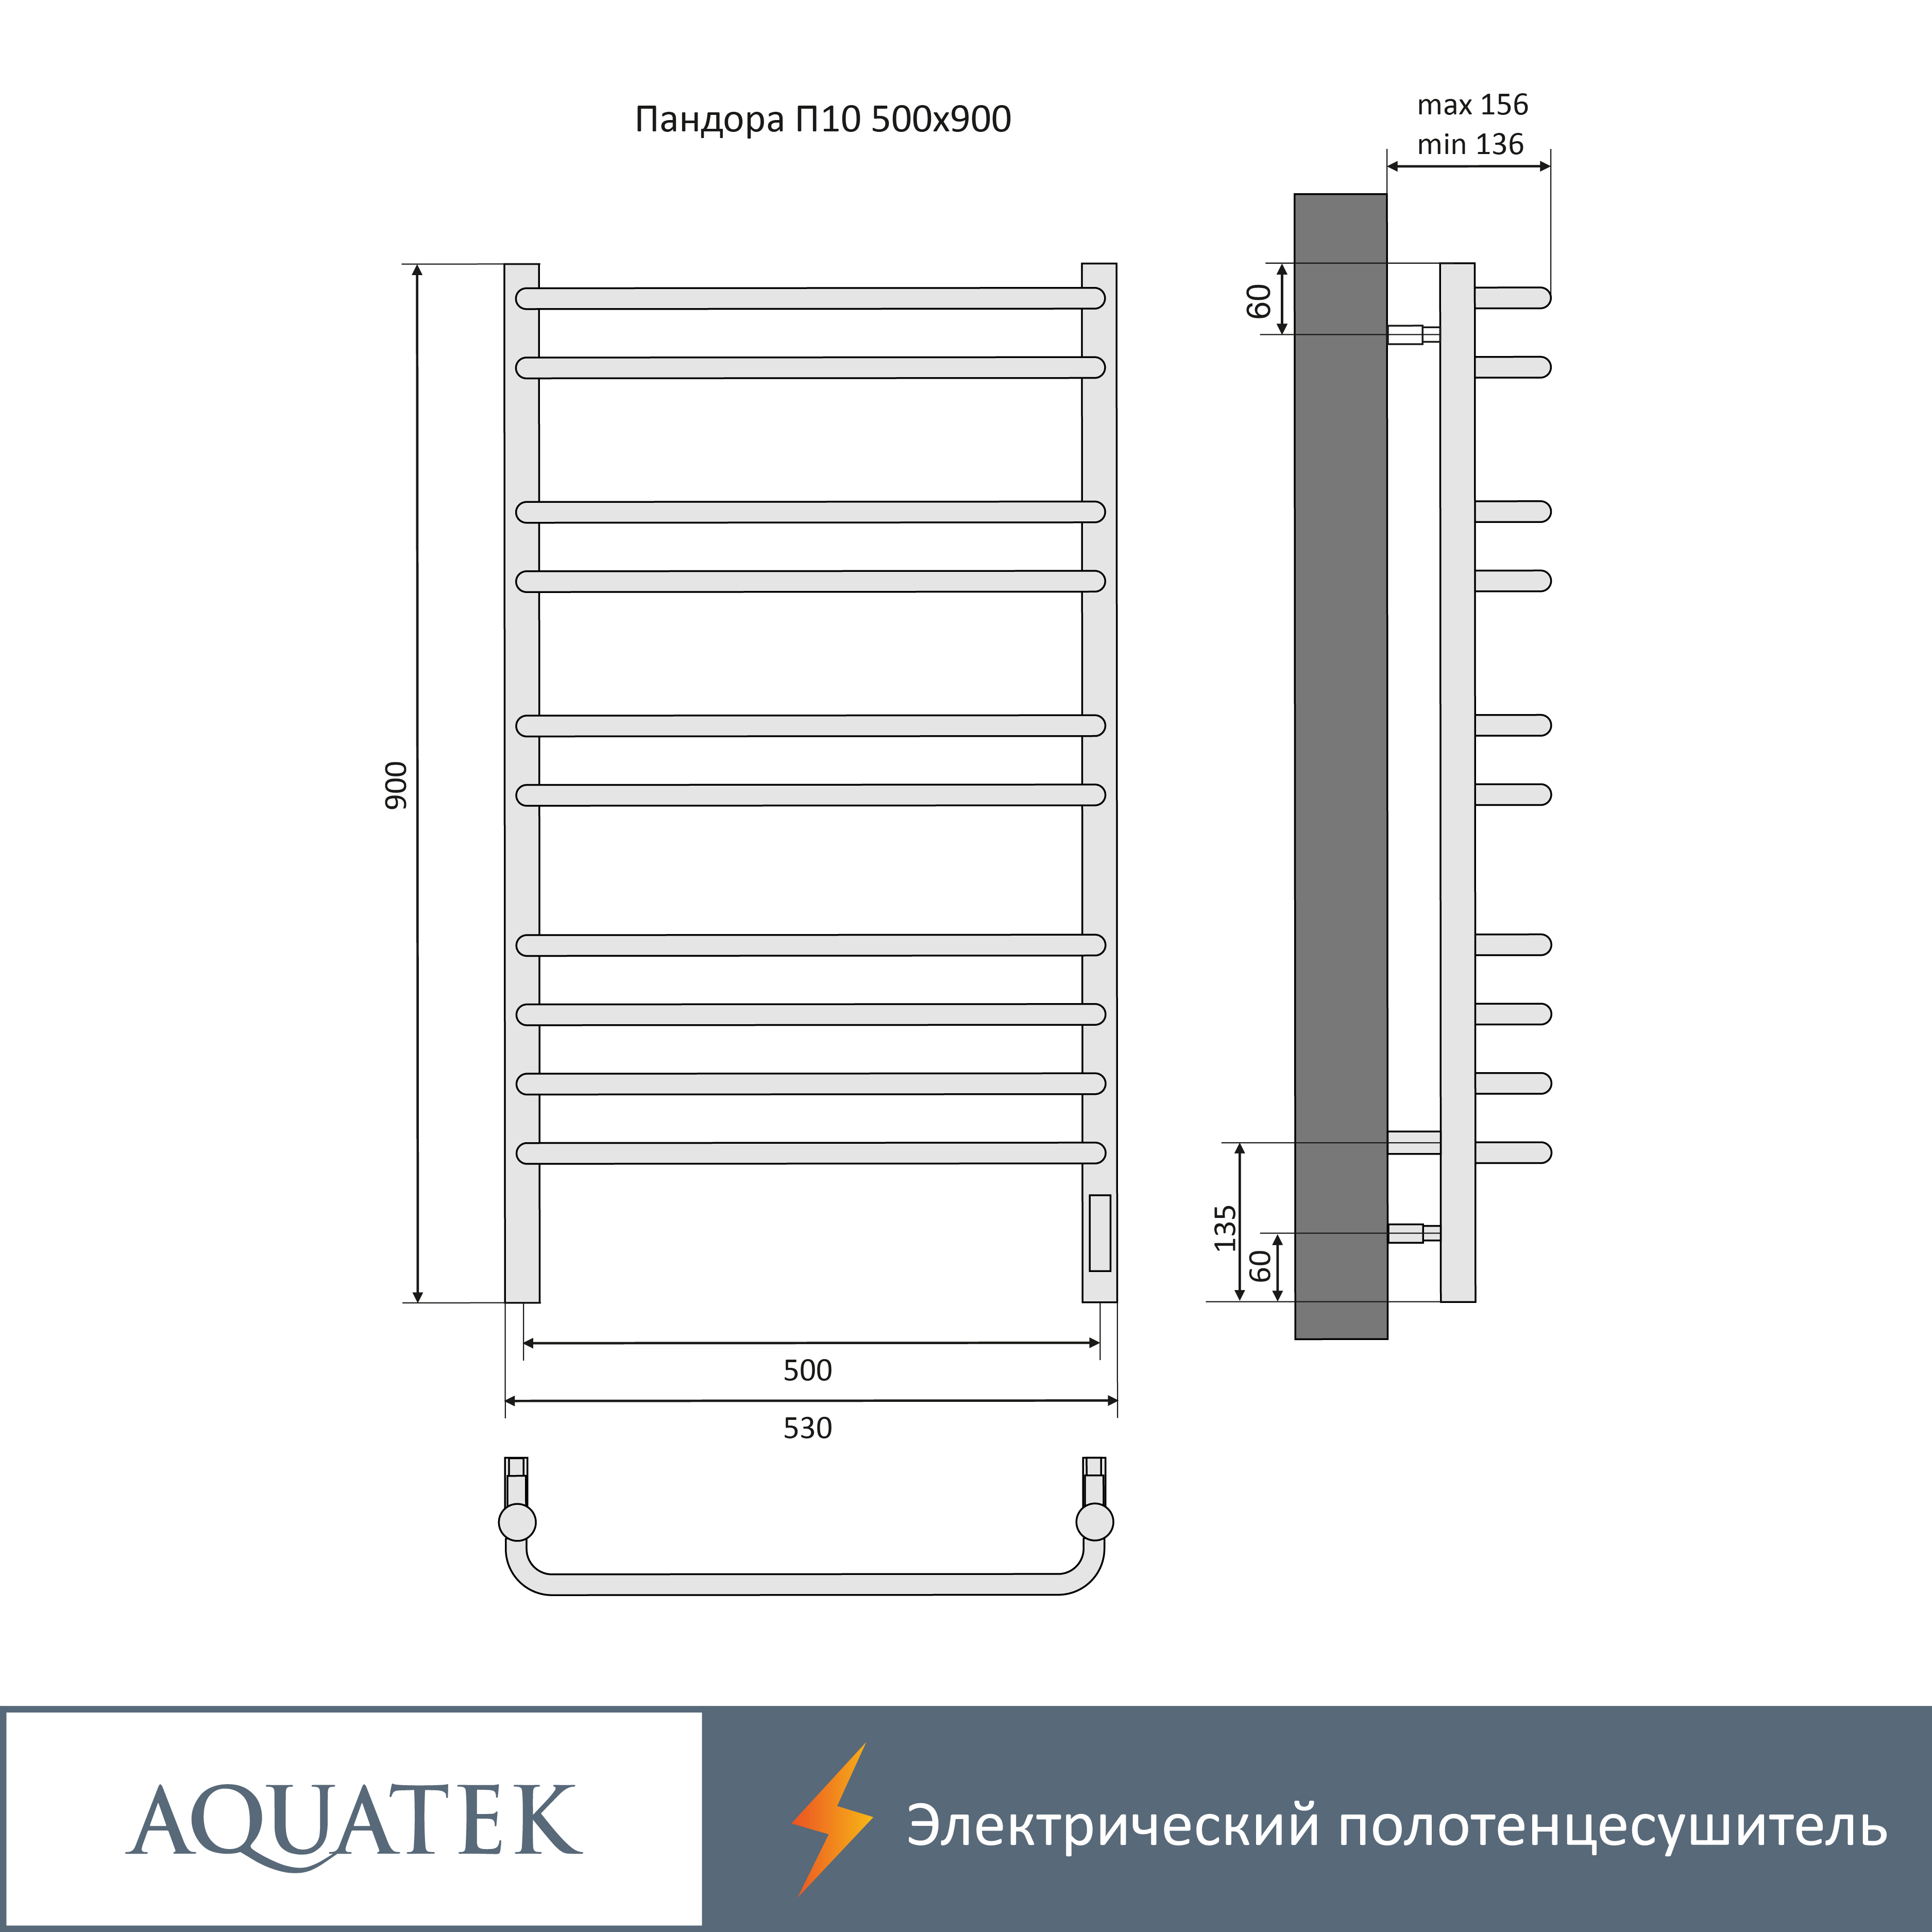 Полотенцесушитель электрический Aquatek Пандора П10 500х900, quick touch, черный муар AQ EL RPC1090BL - 18